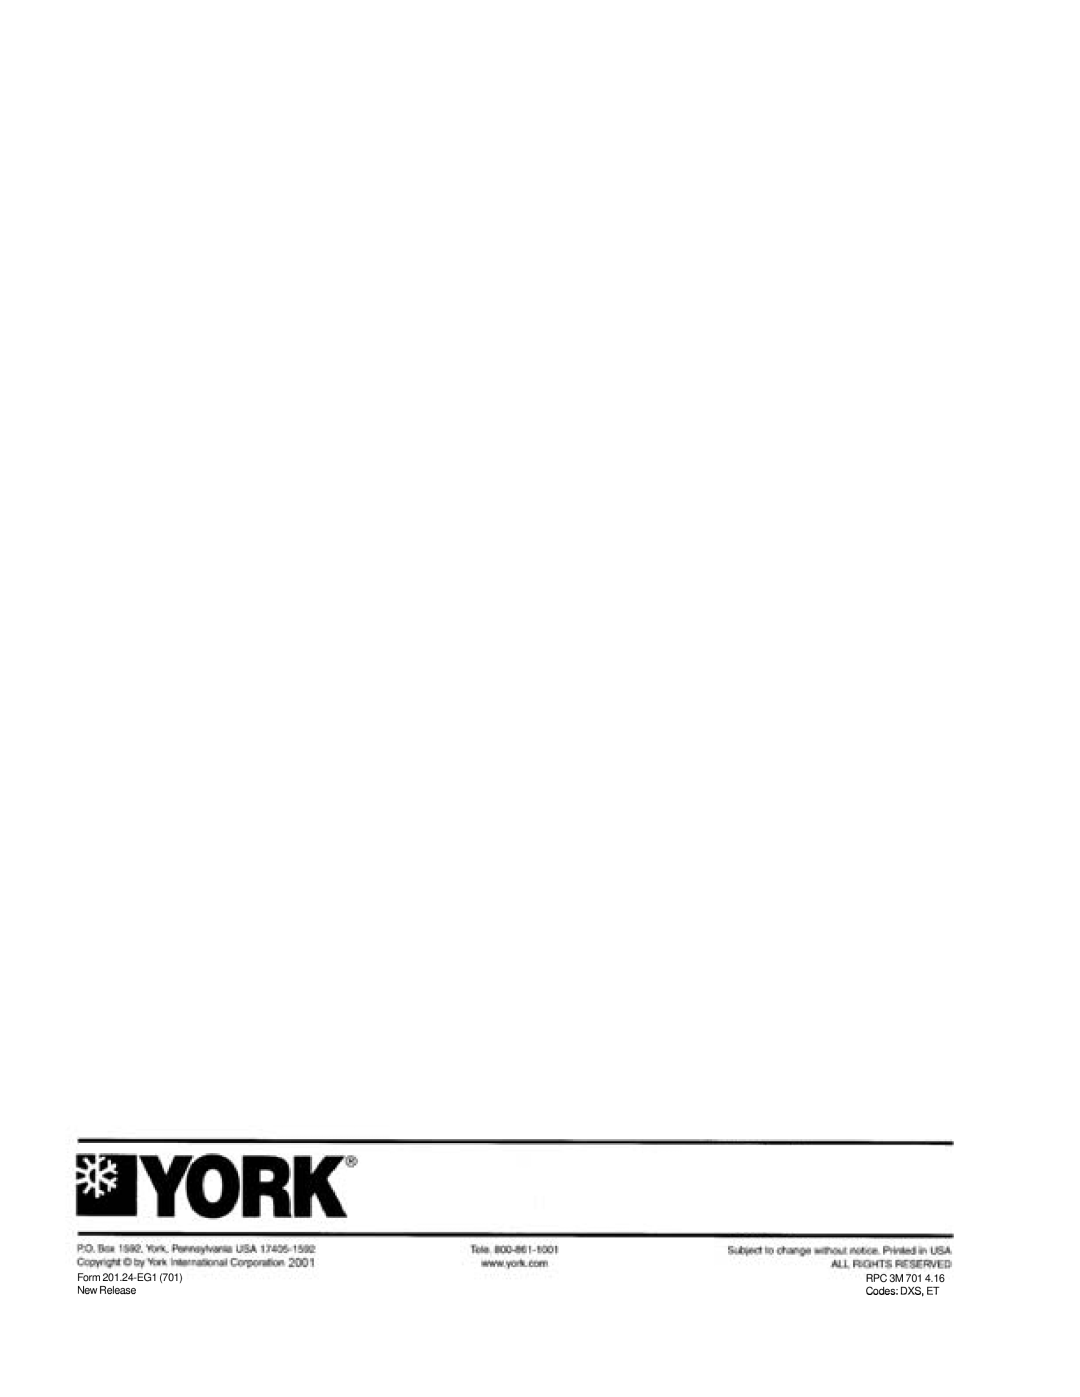 York YCWS manual Form 201.24-EG1701, RPC 3M, New Release, Codes DXS, ET 